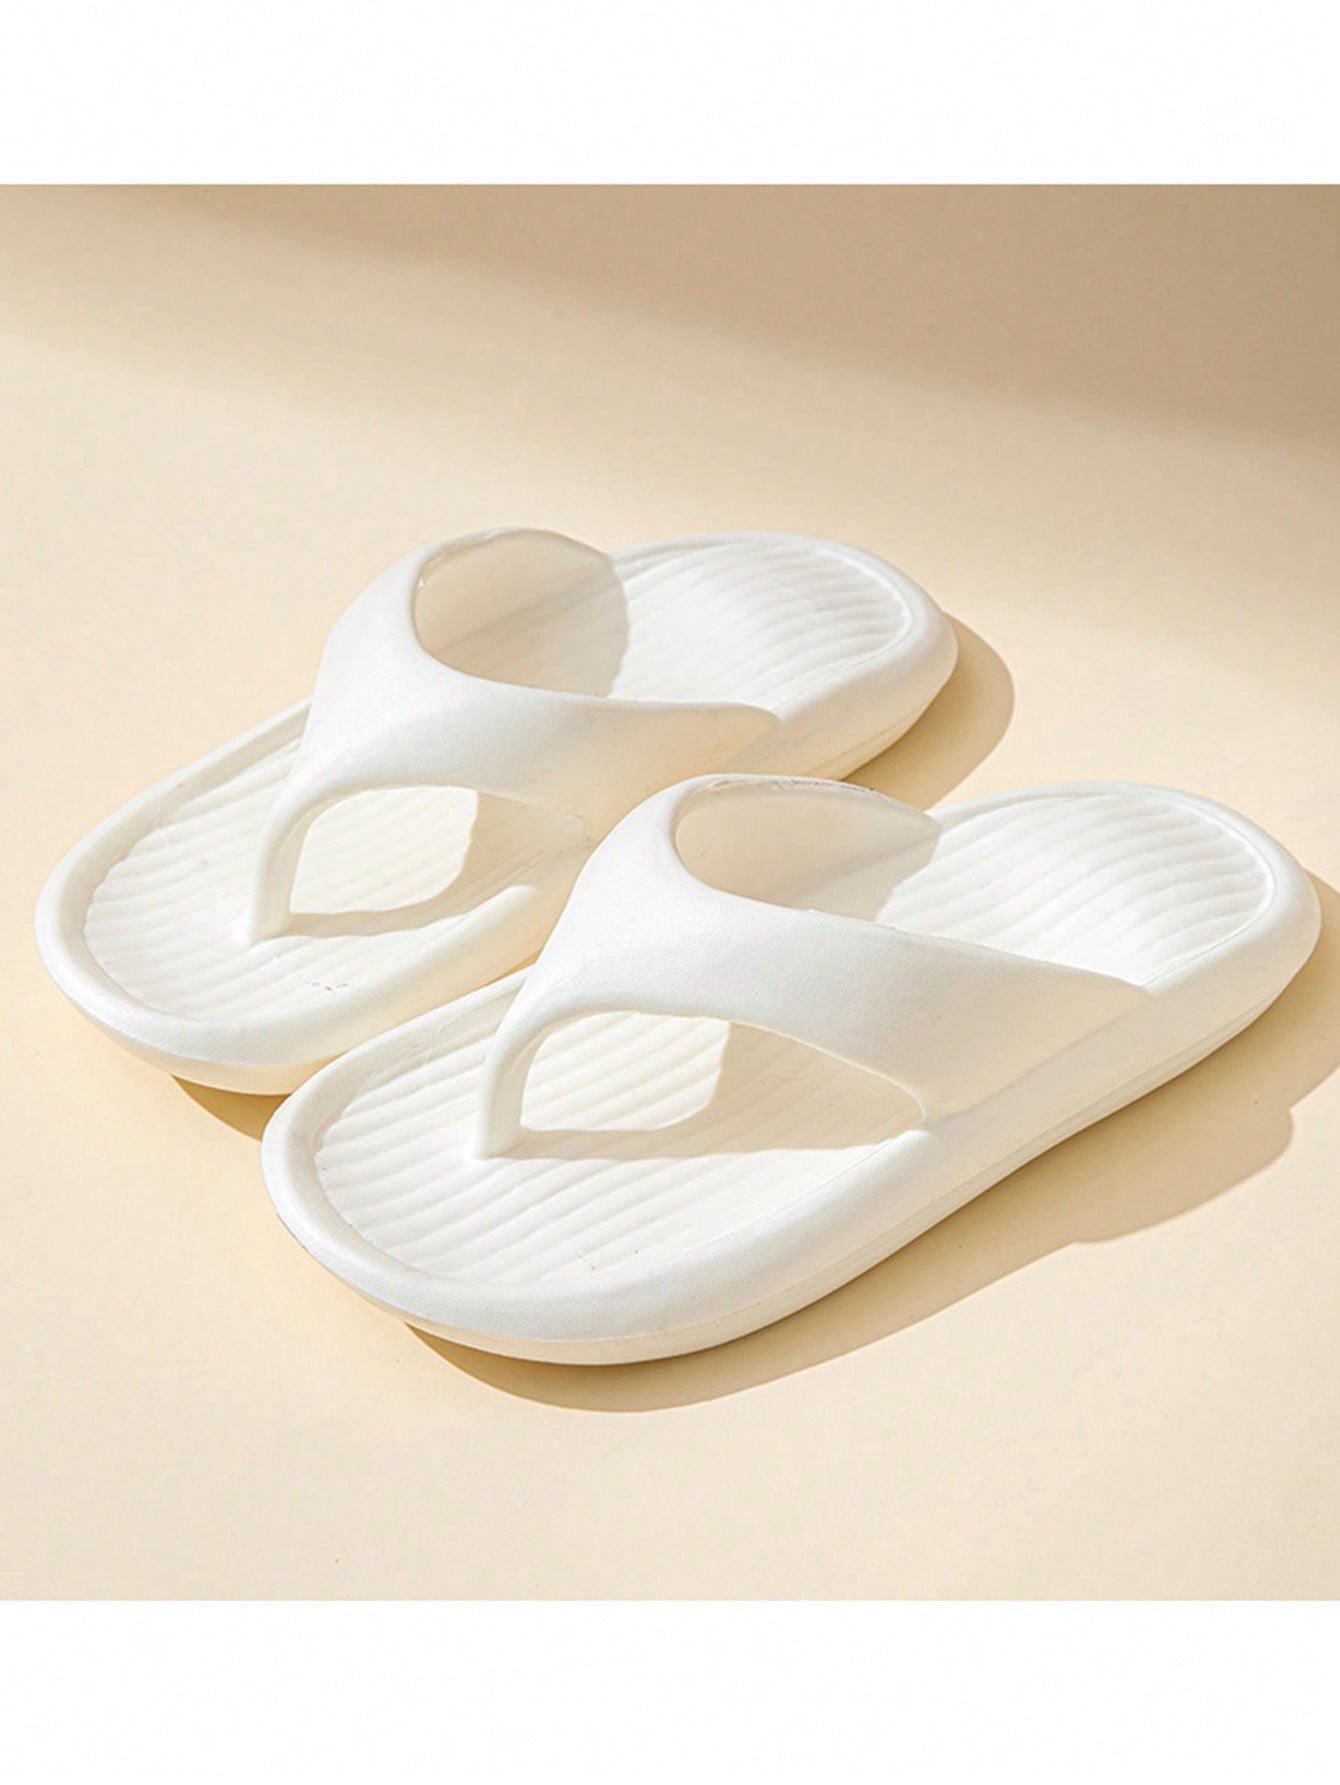 1 Pair Anti-Slip Eva Bathroom Flip Flop For Women, Thick Sole With Toe Separator, Beach Sandals-White-1